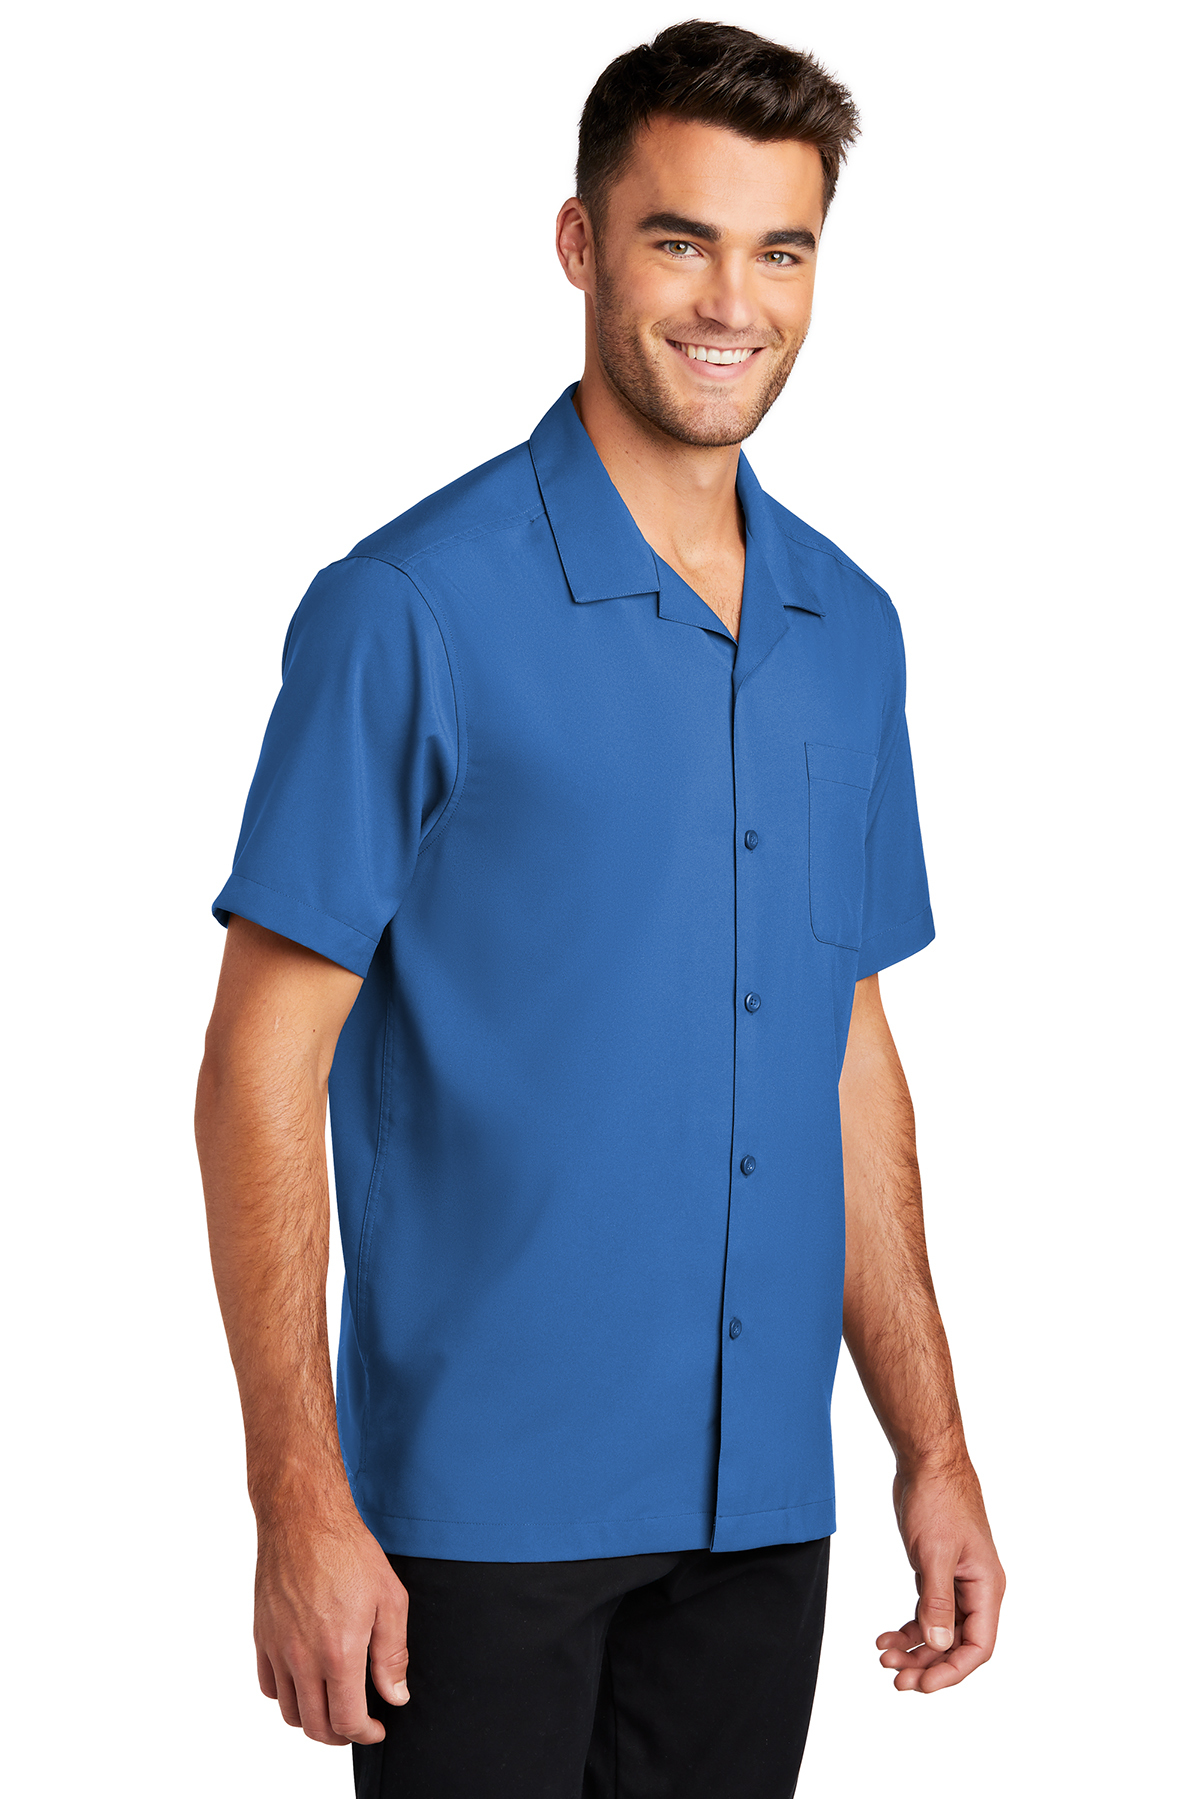 Port Authority Short Sleeve Performance Staff Shirt | Product | Company ...